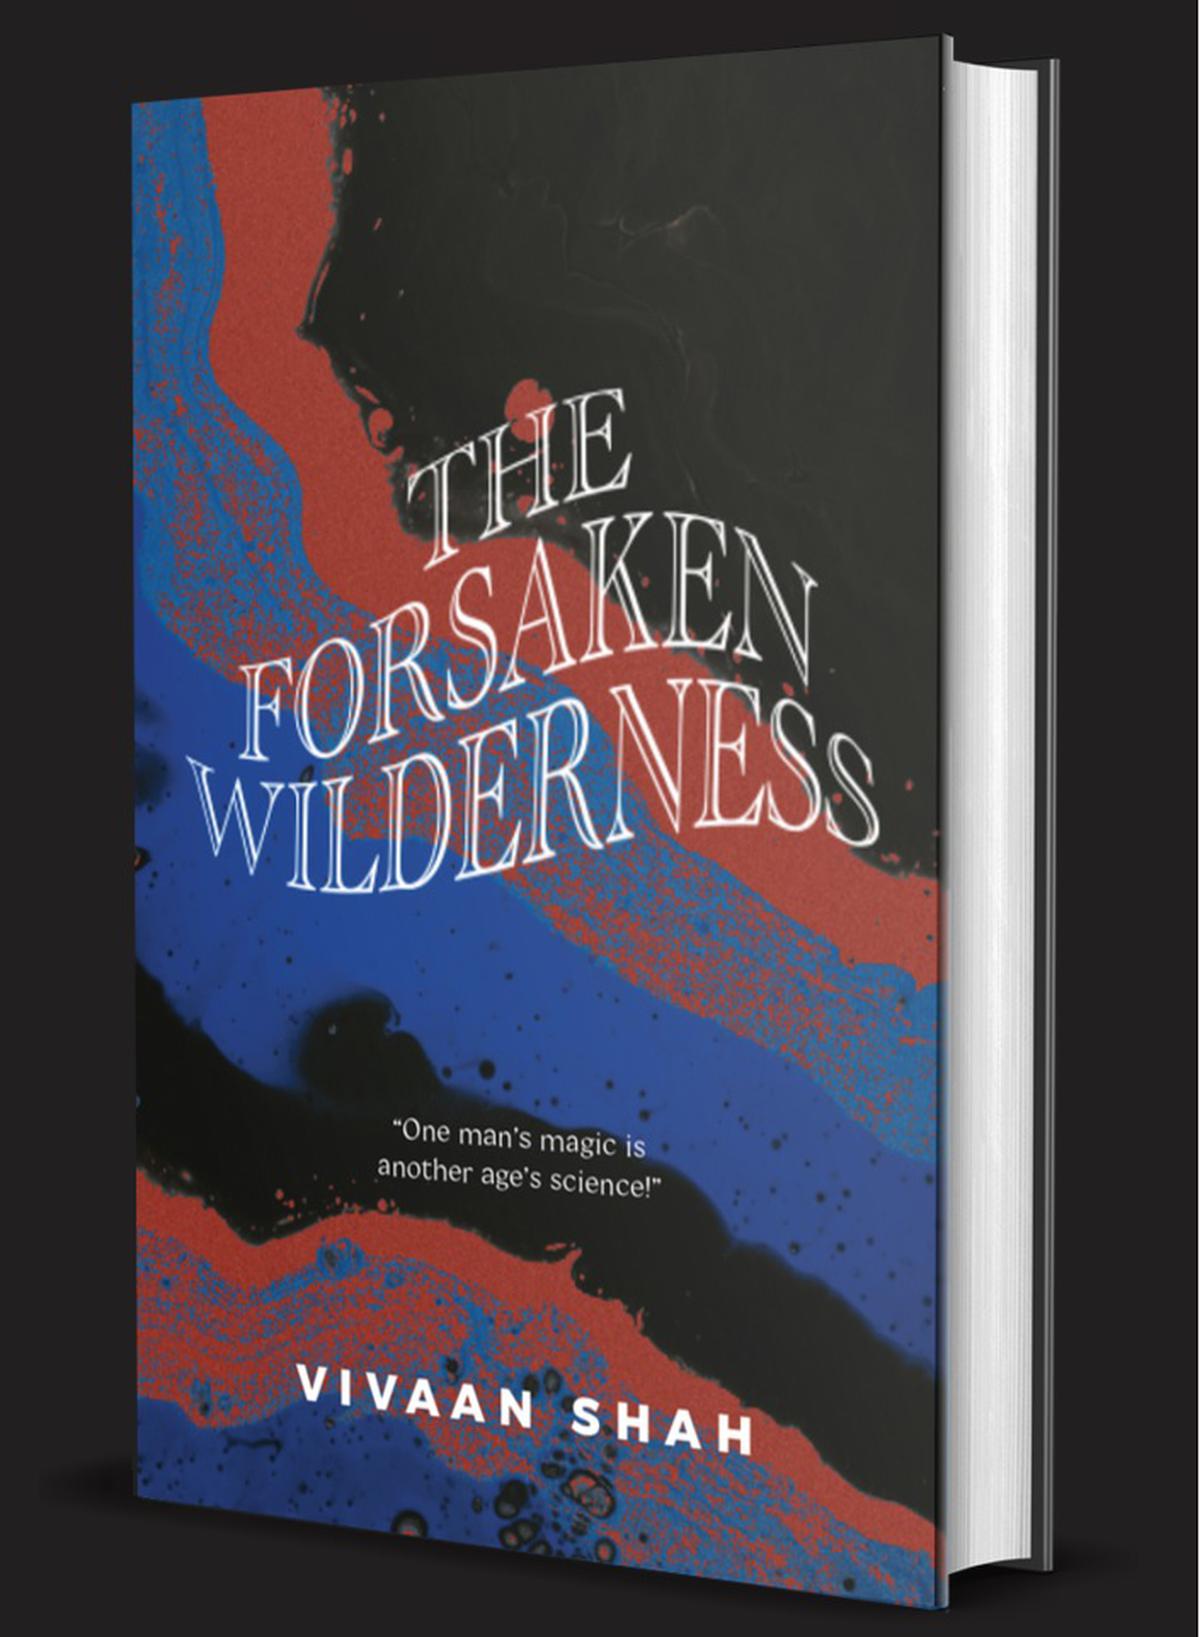 Vivaan’s book The Forsaken Wilderness